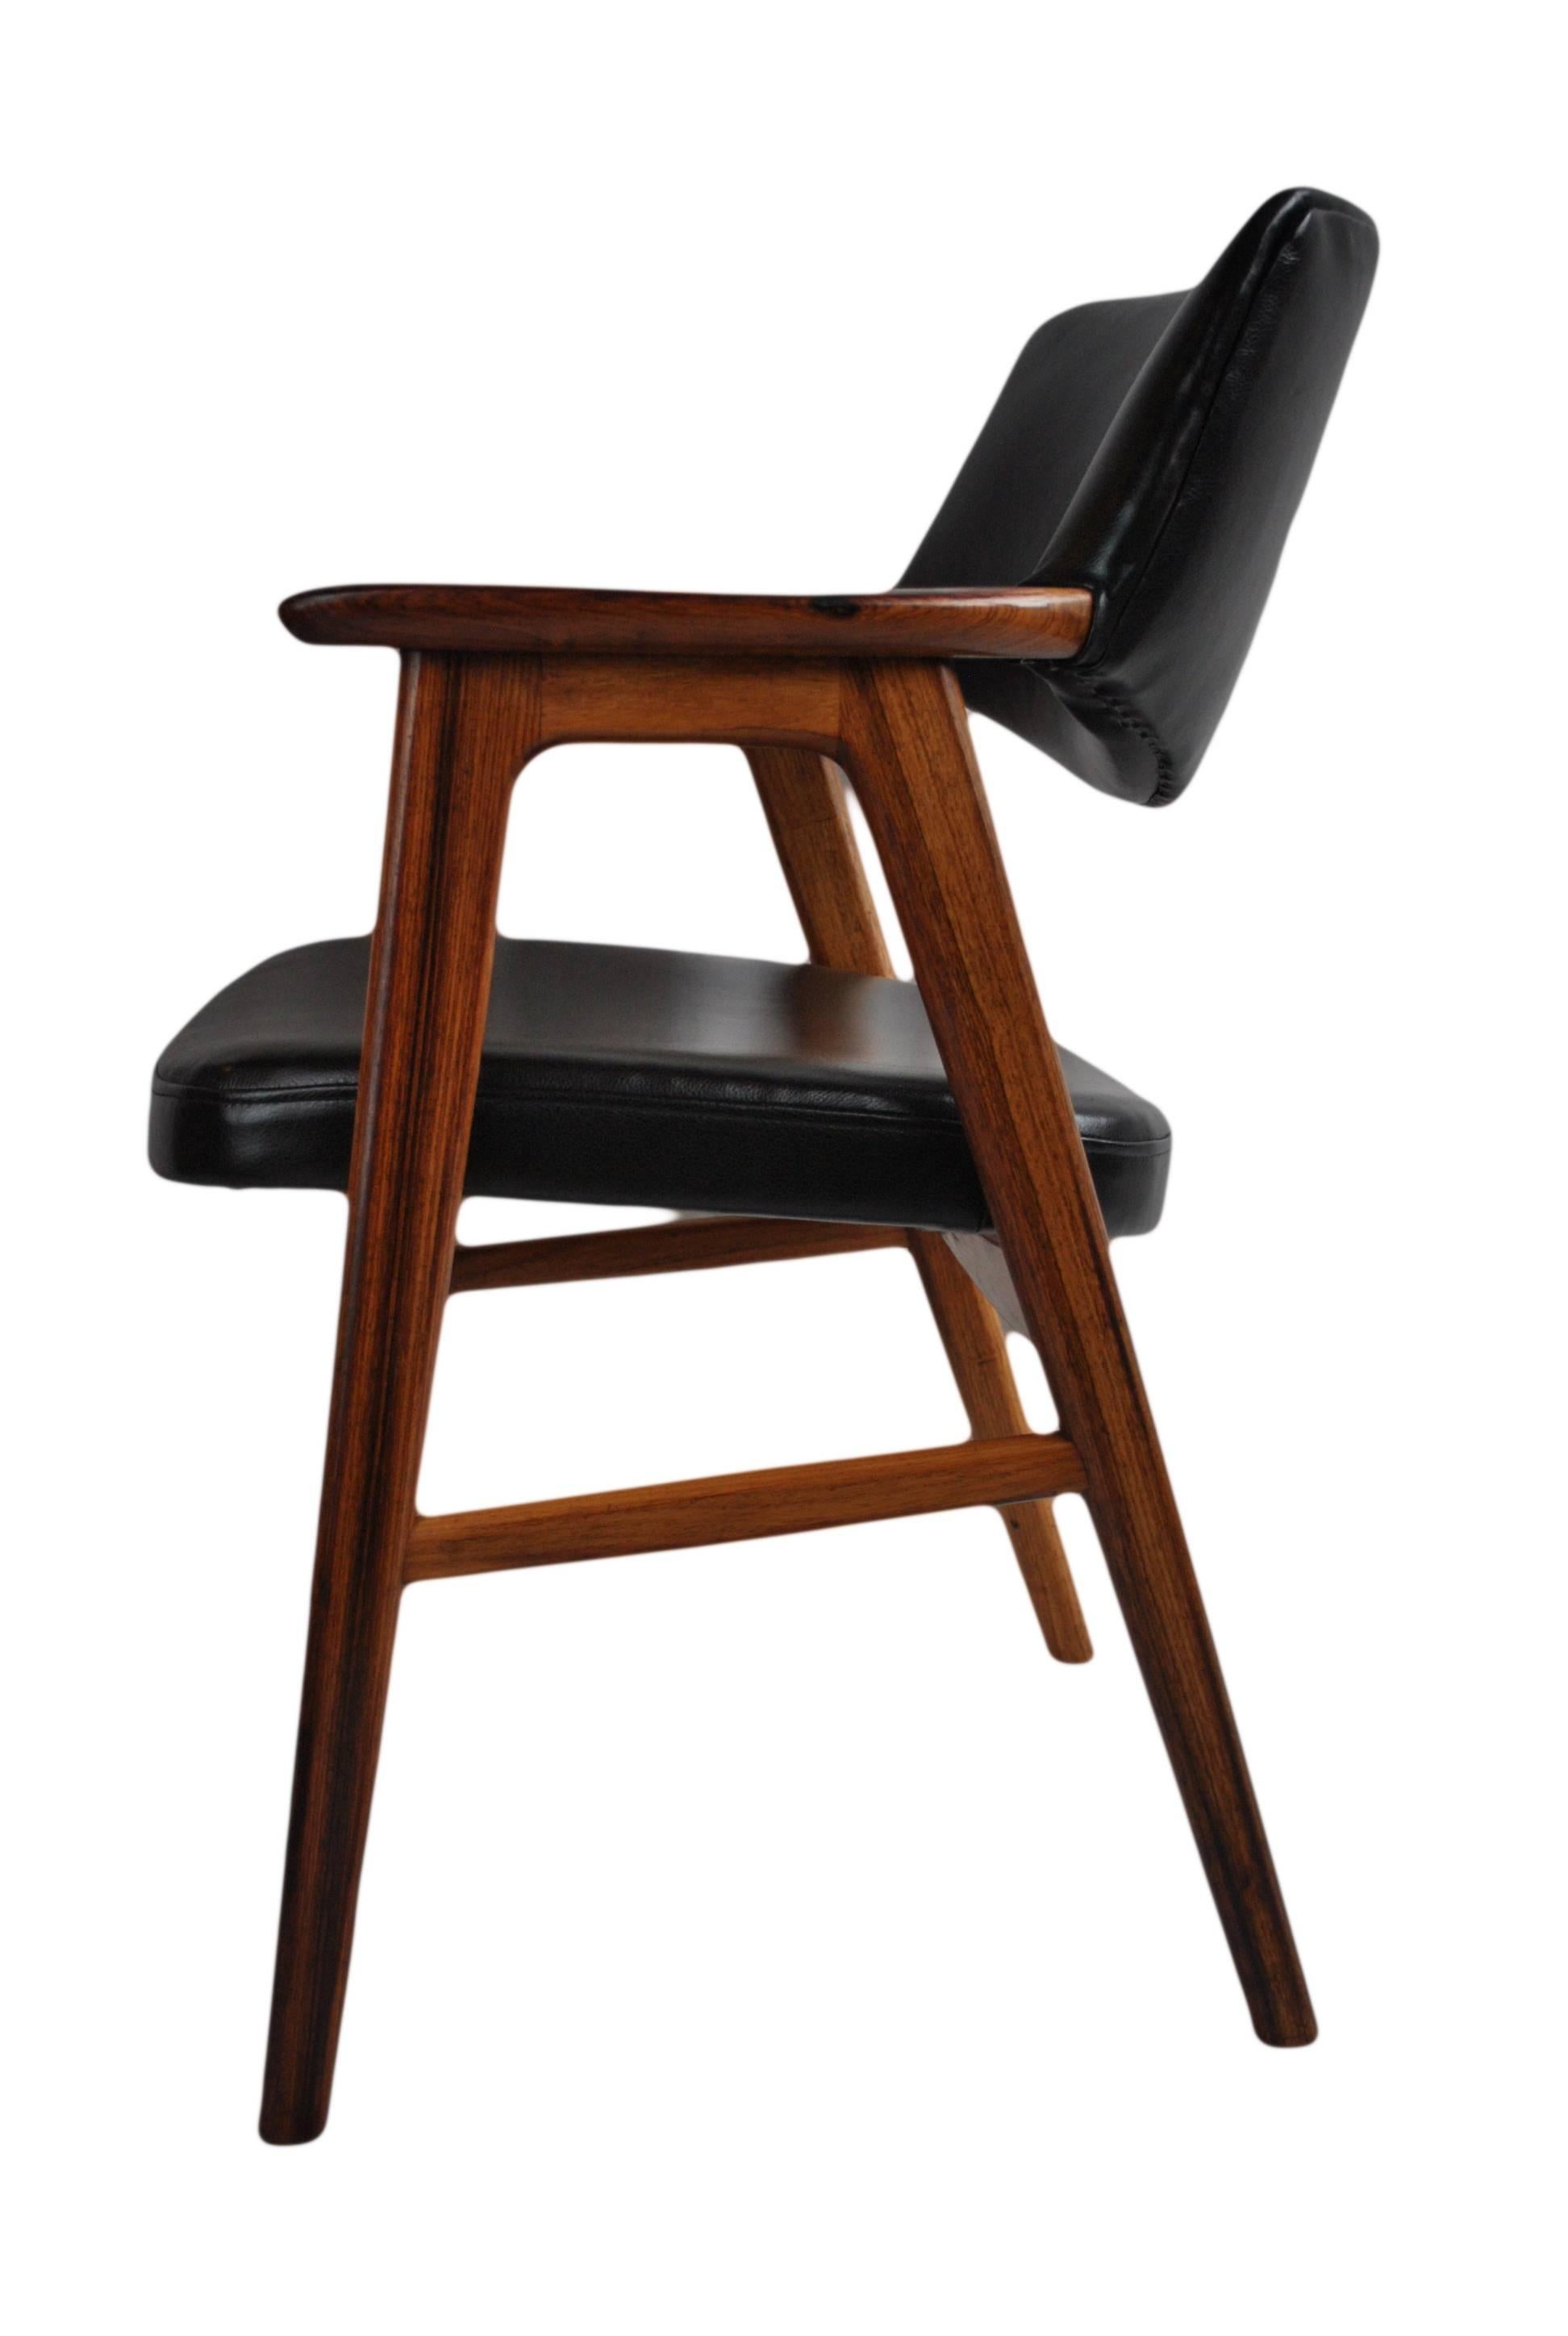 Danish Pair of Fully Restored and Reupholstered Erik Kirkegaard Chairs